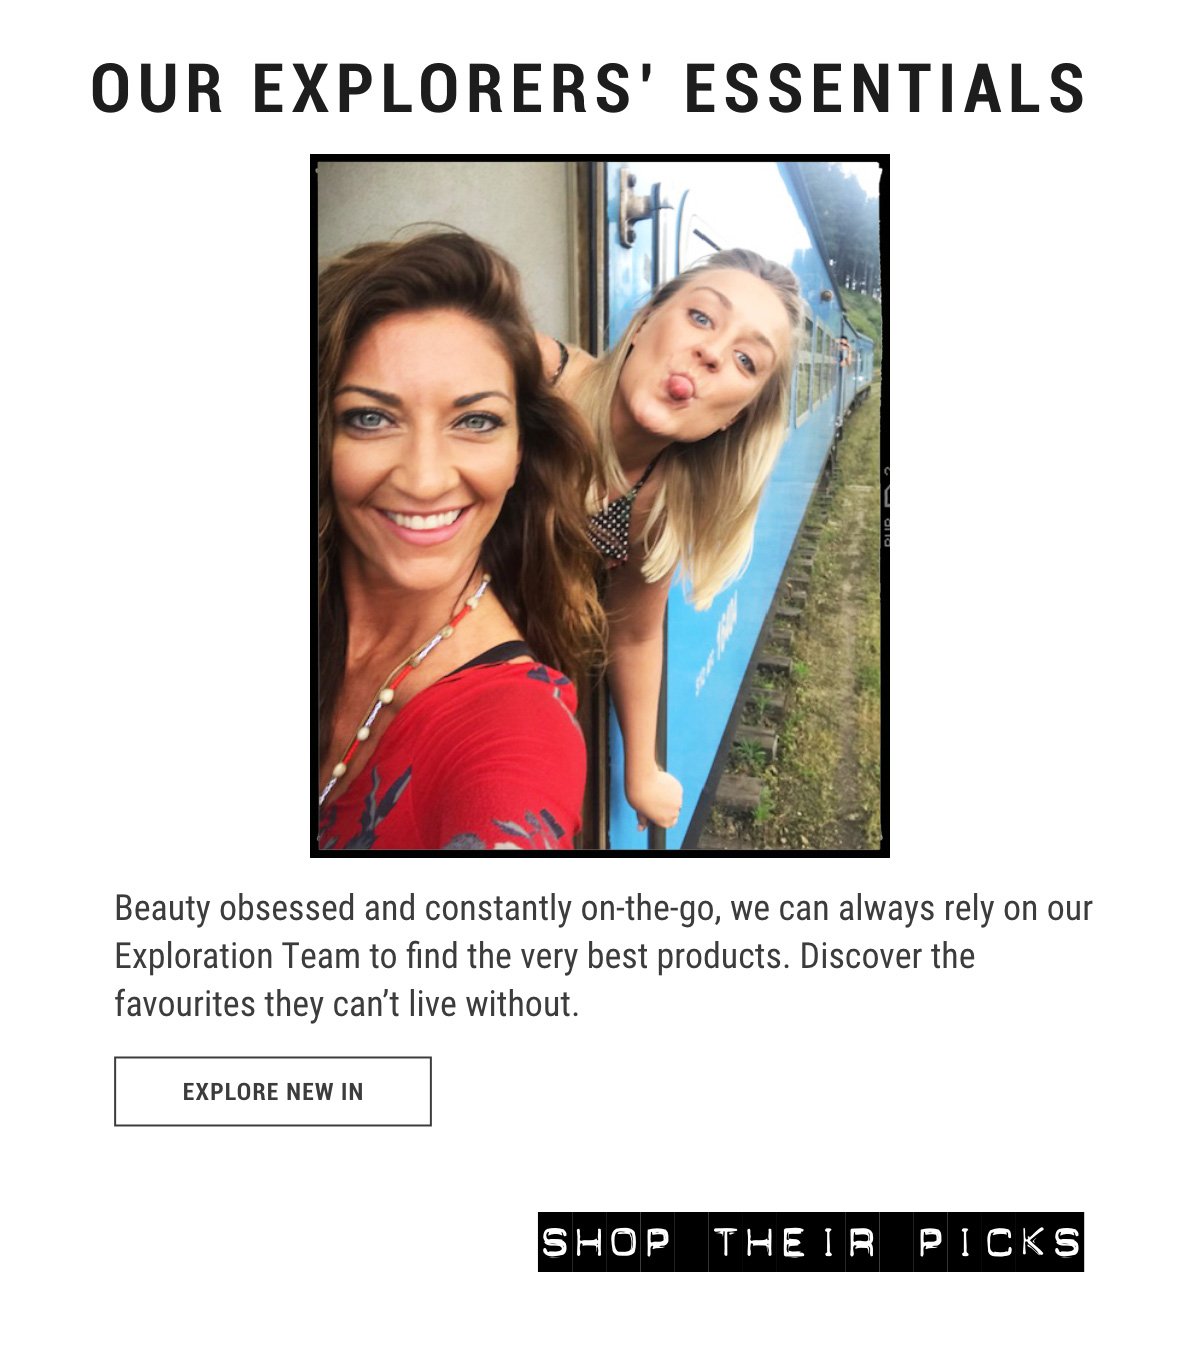 Our Explorers Essentials